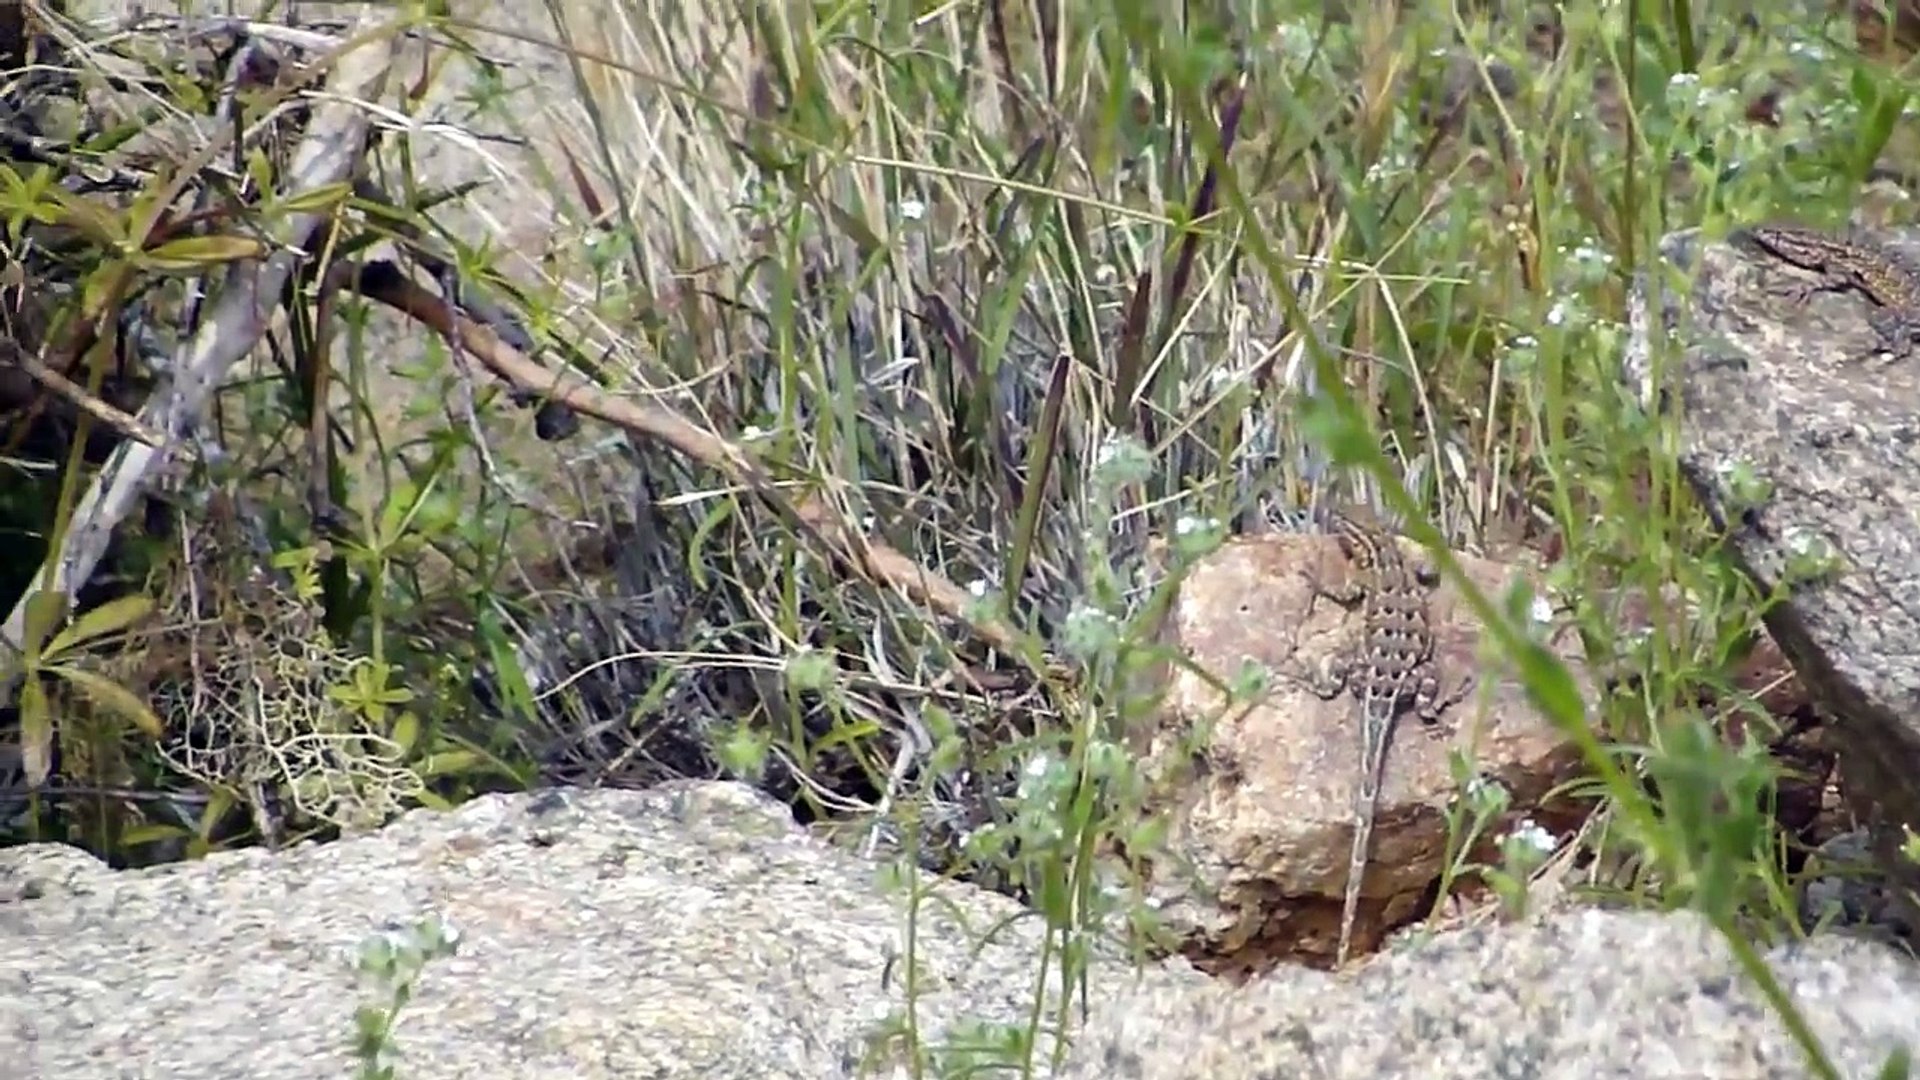 Lizard Wrangling Arizona Style